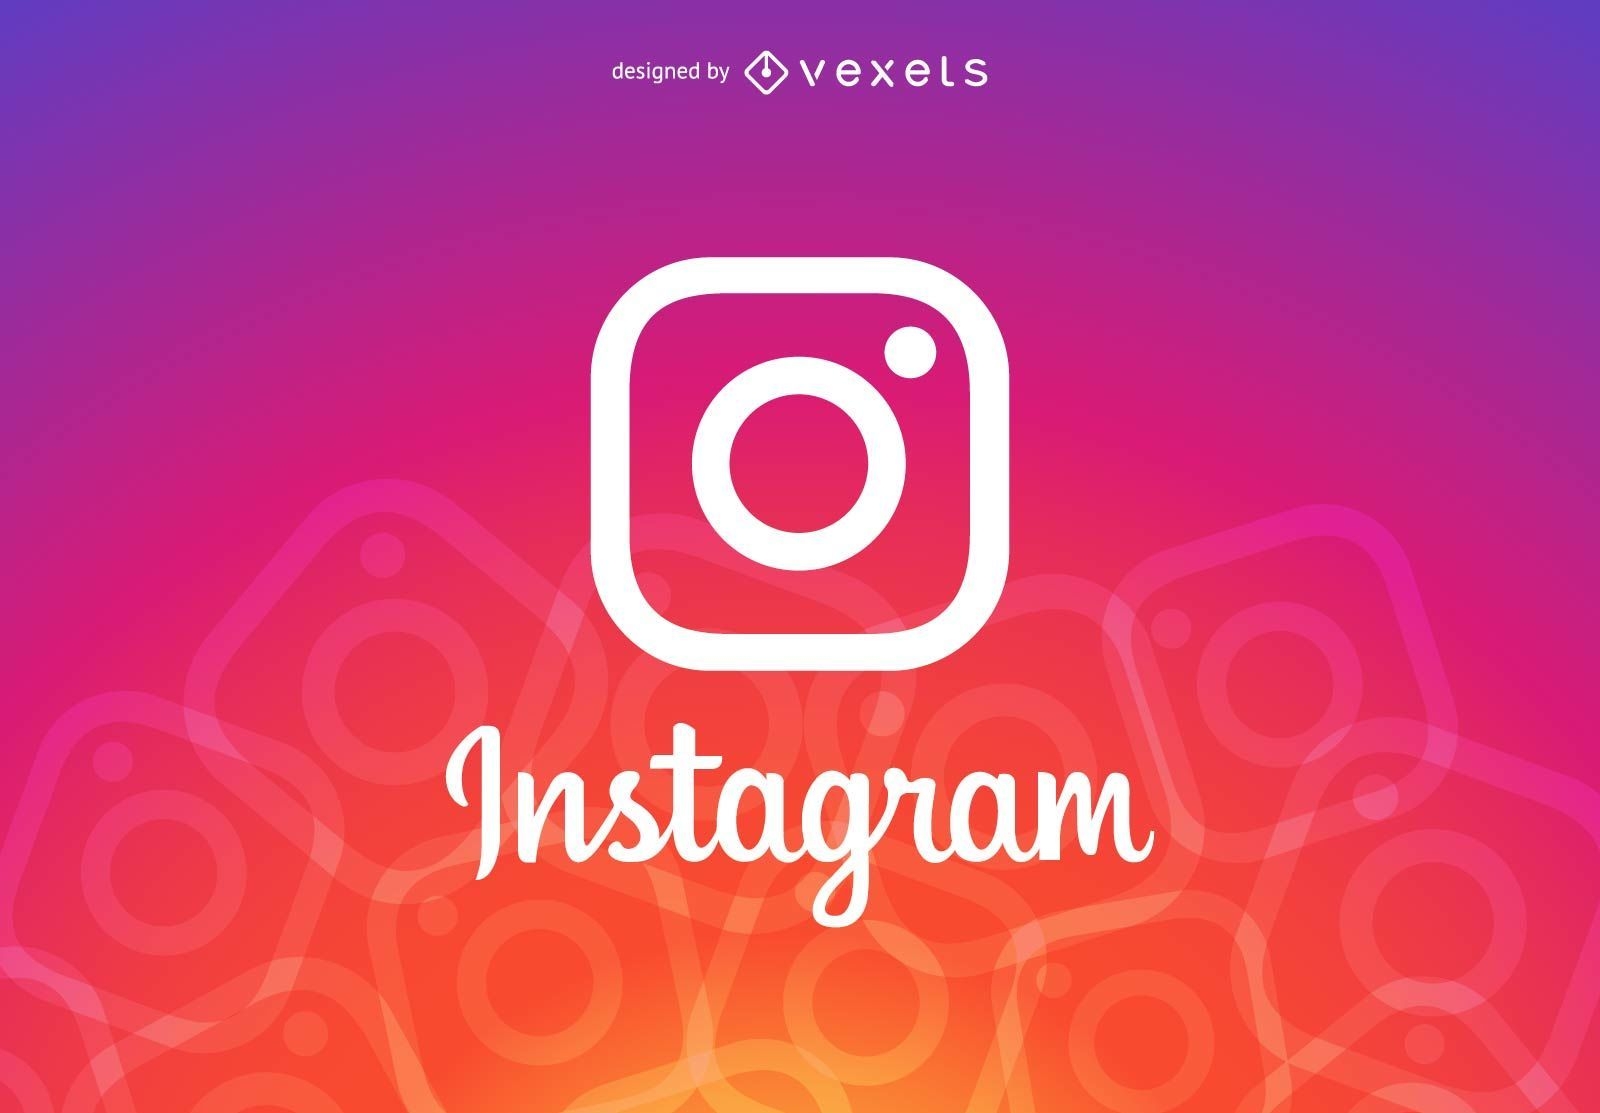 Kopfzeile des Instagram-Logos